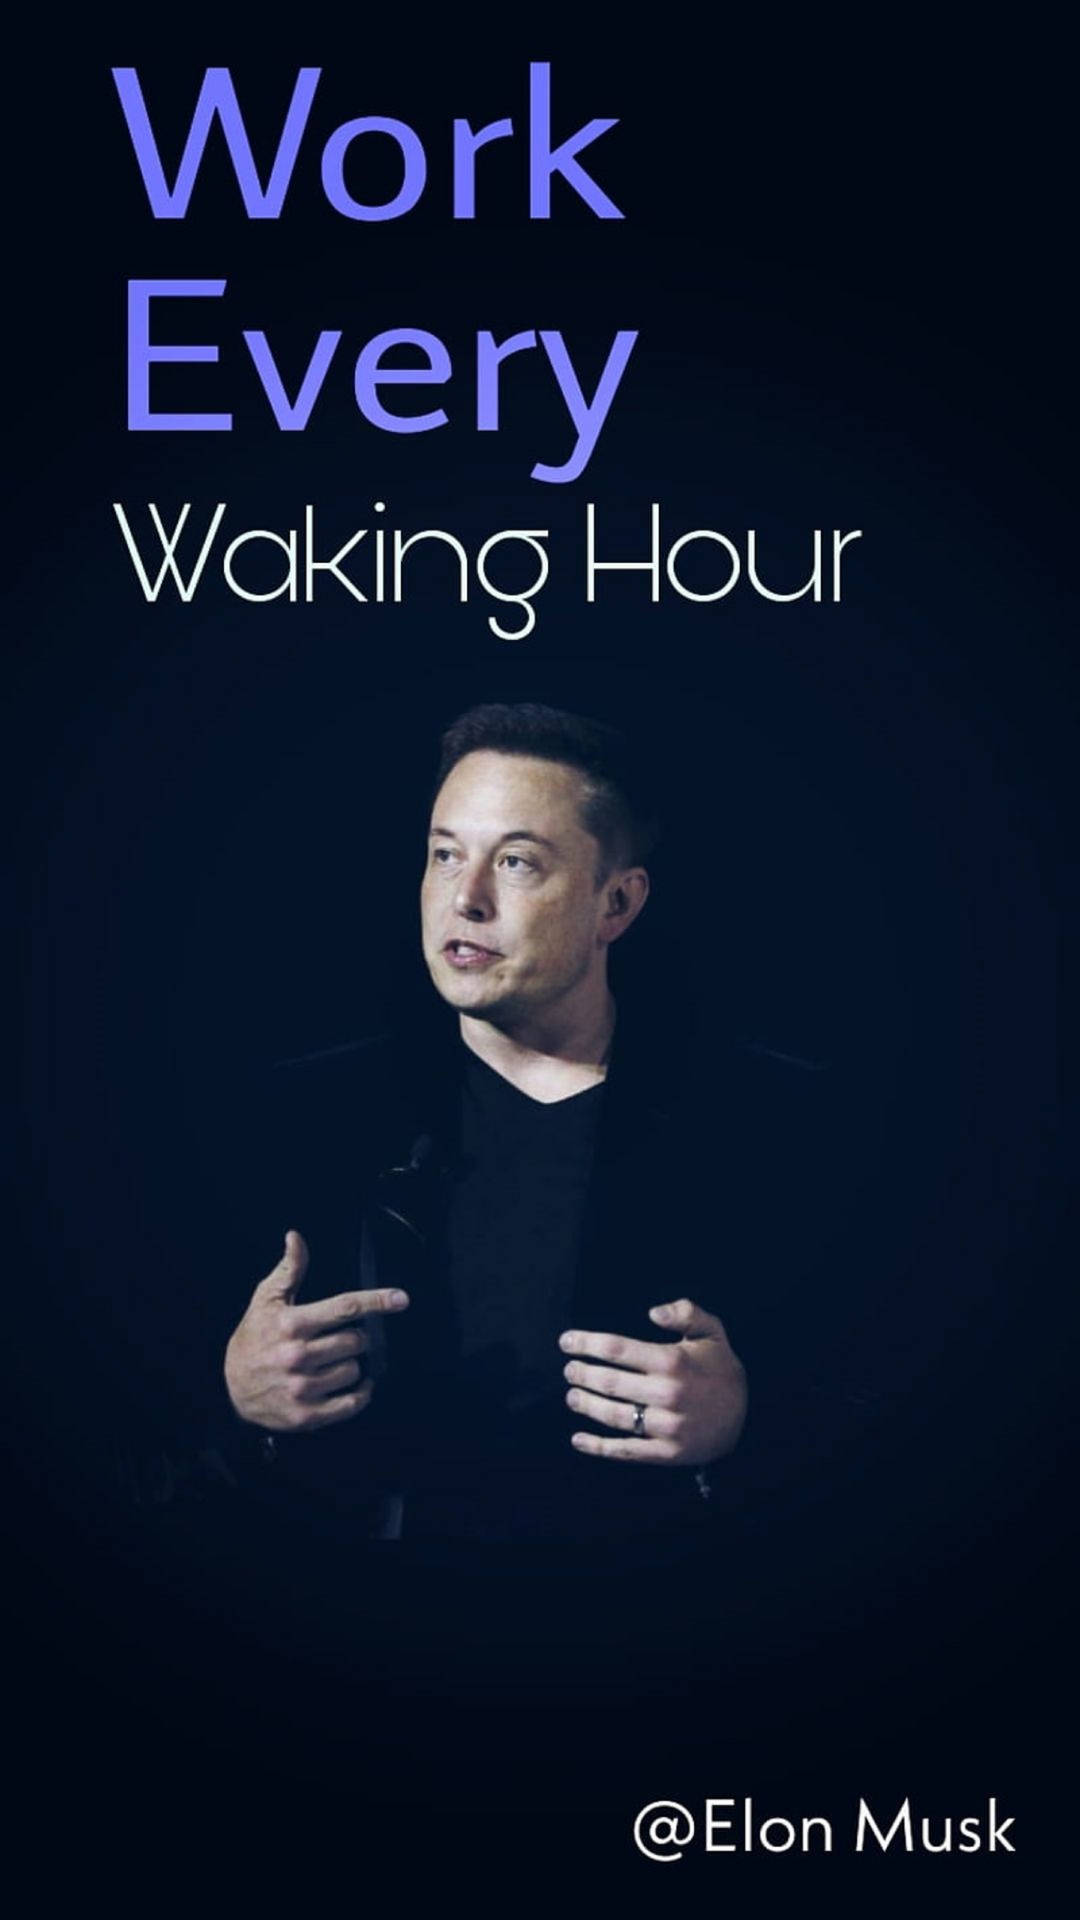 Elon Musk Work Every Waking Hour Background